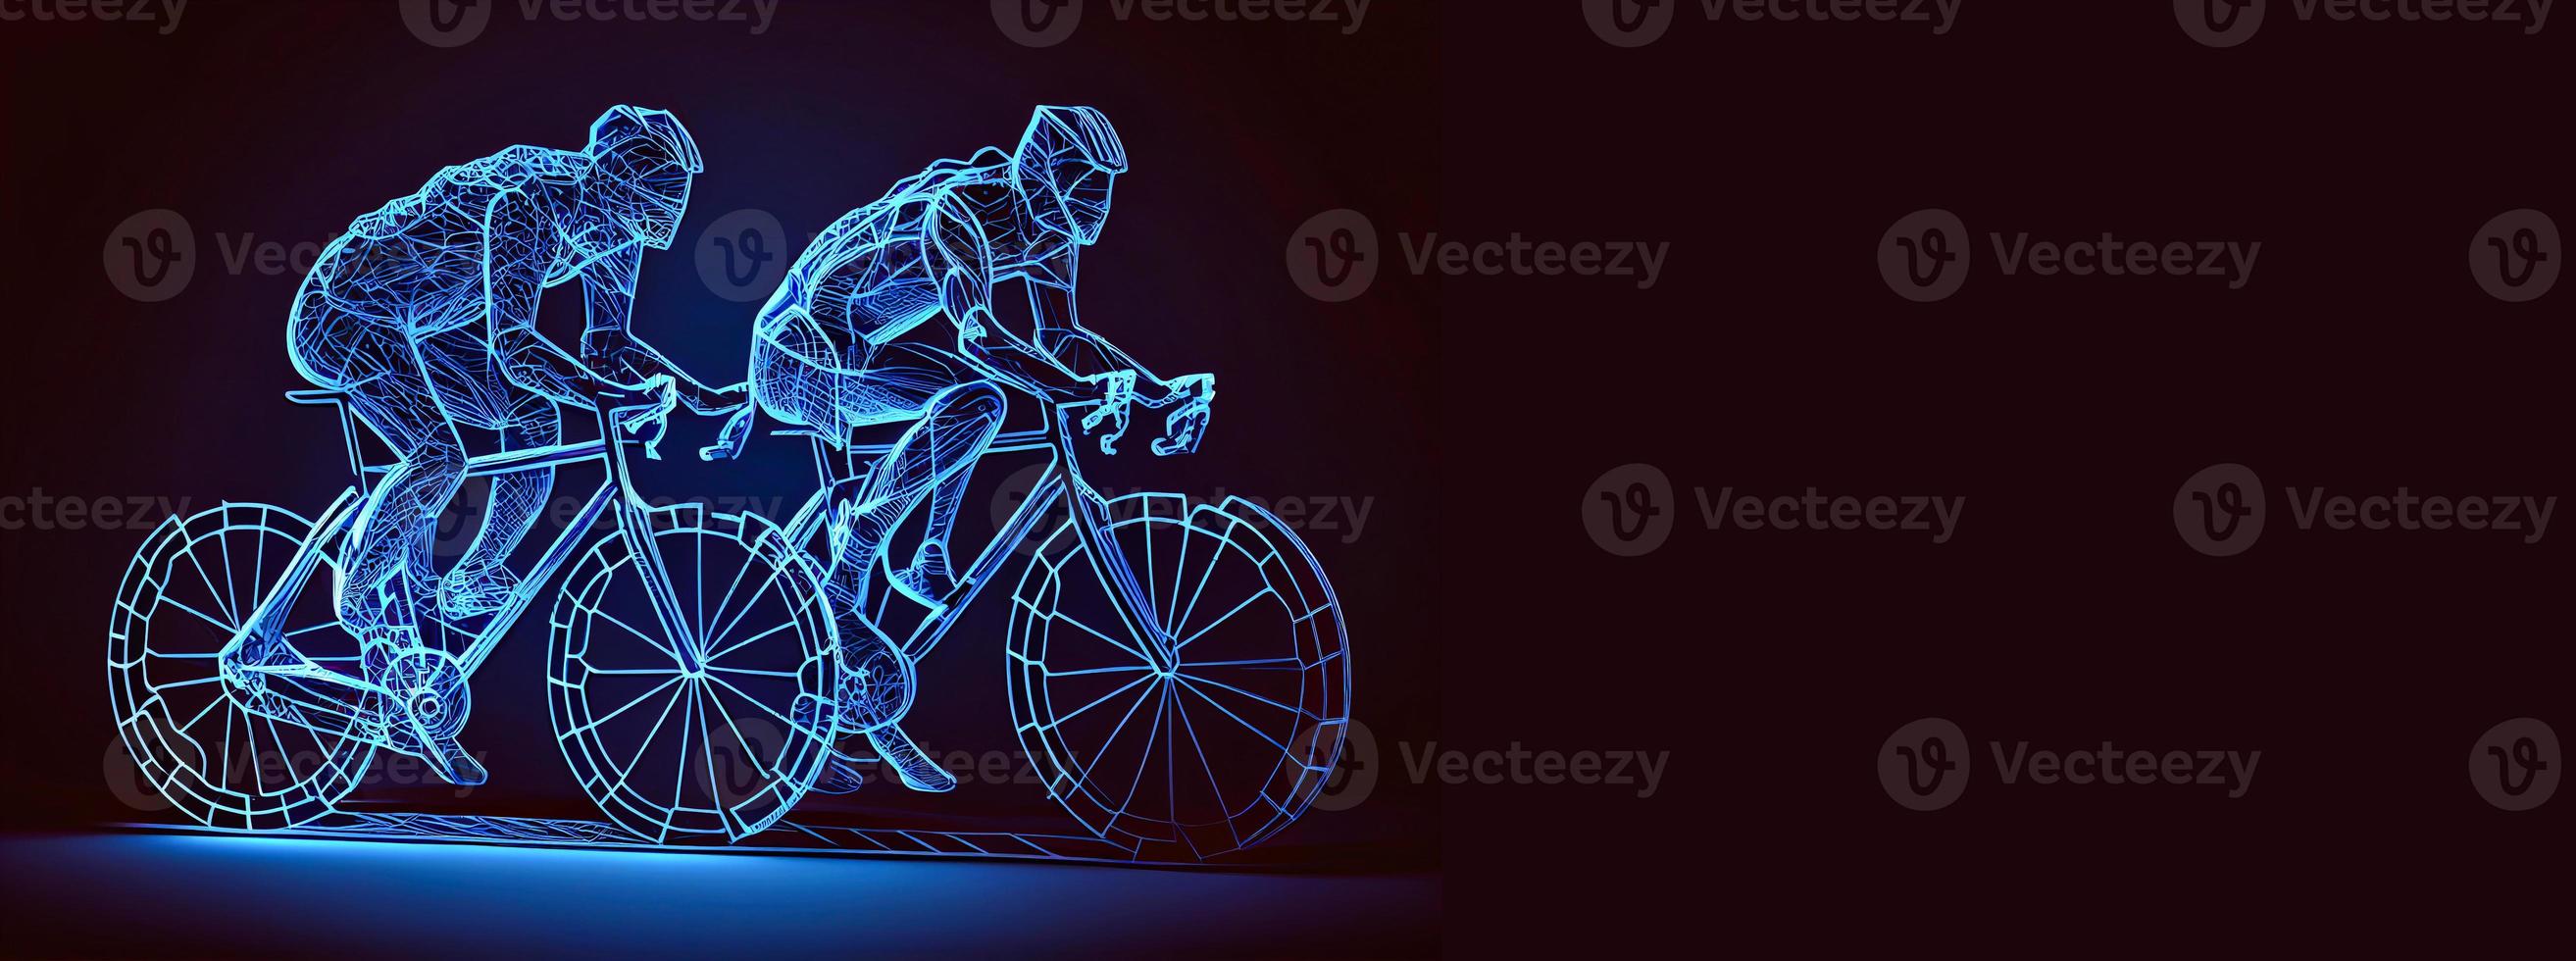 profesional ciclista involucrado en un bicicleta carrera. obra de arte en el estilo de pintar golpes ai foto